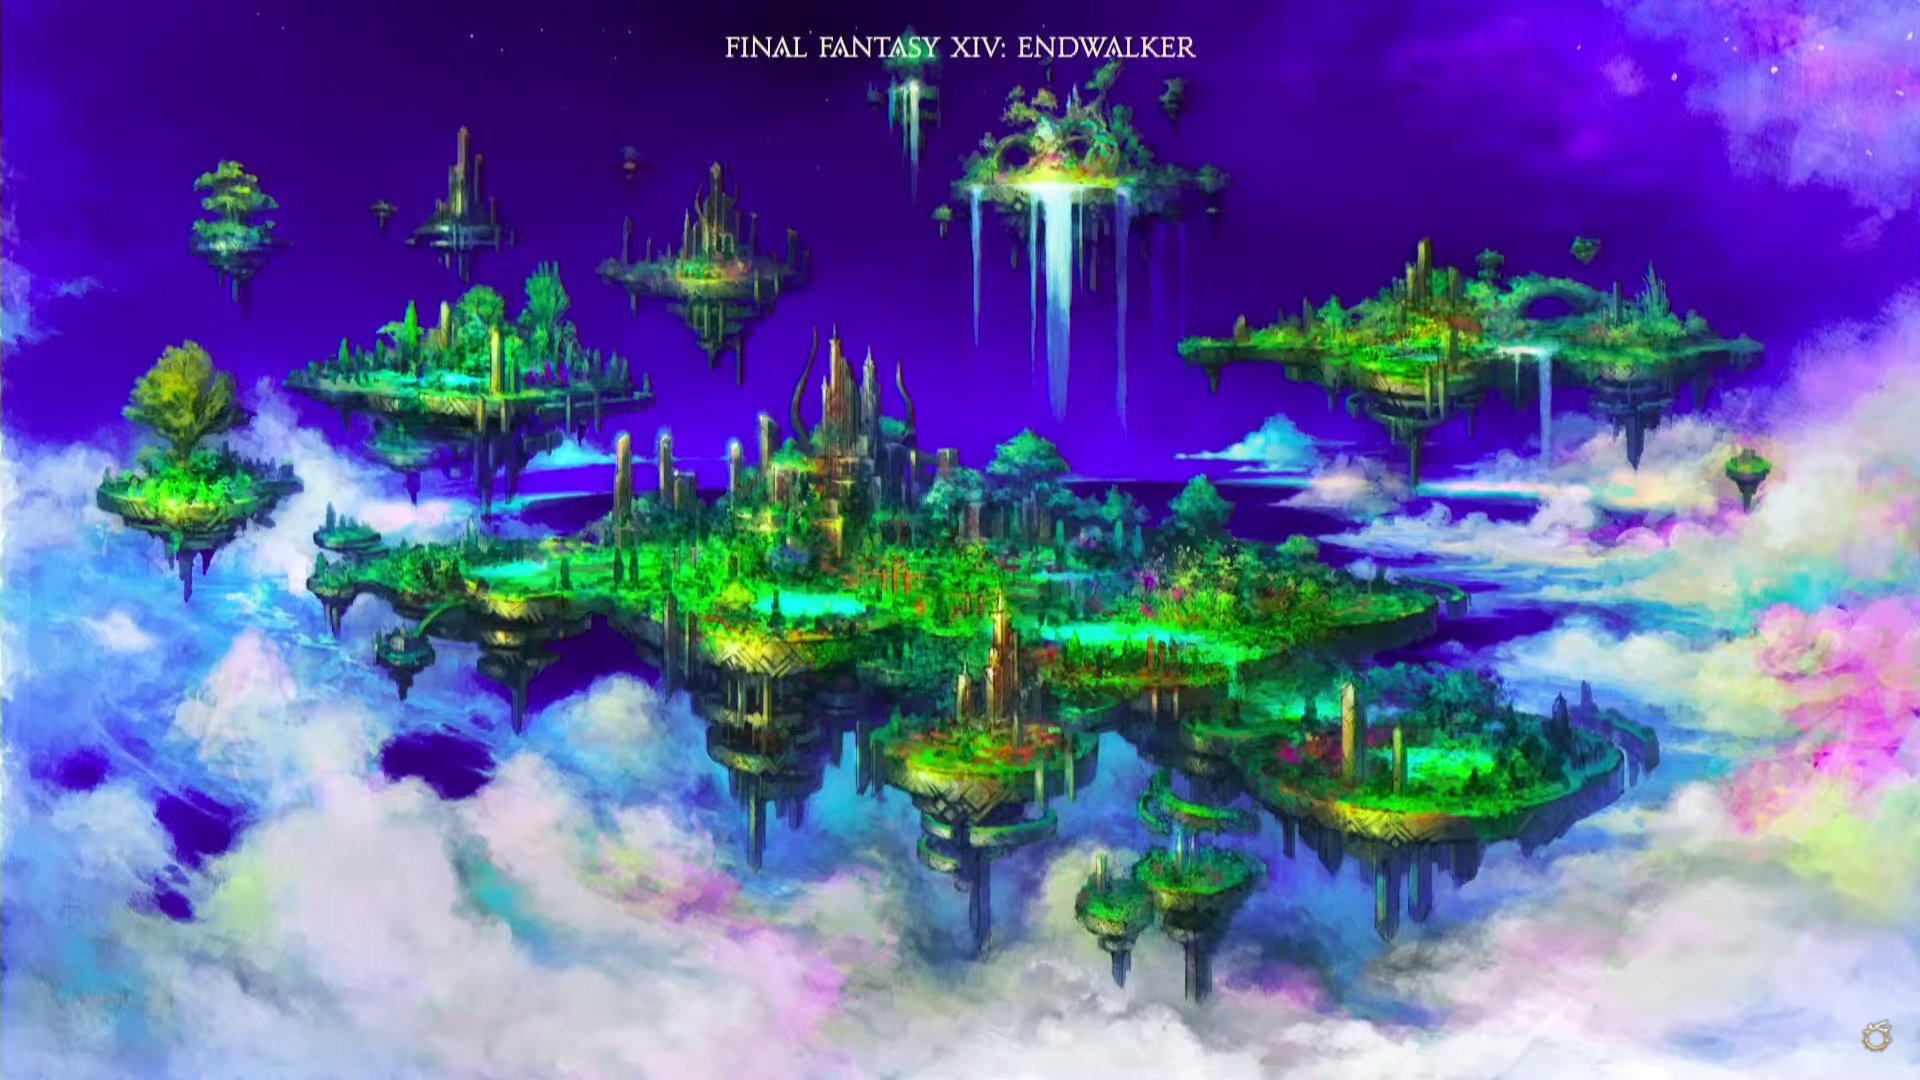 FFXIV 6.0 Endwalker: Mysterious Sky Islands